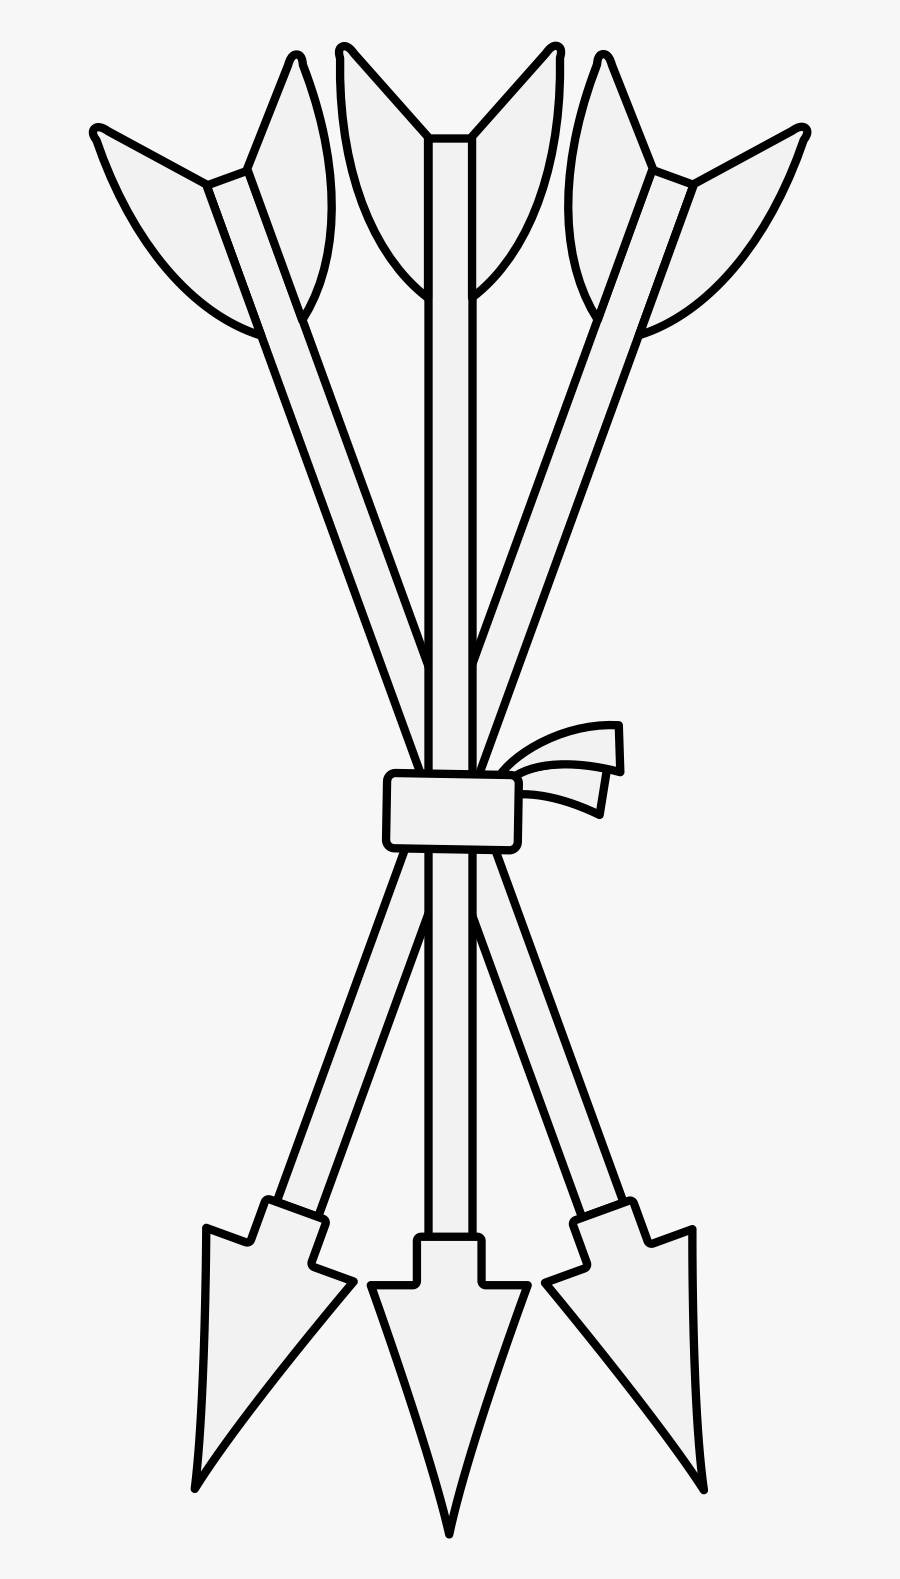 Heraldic Arrow Png, Transparent Clipart